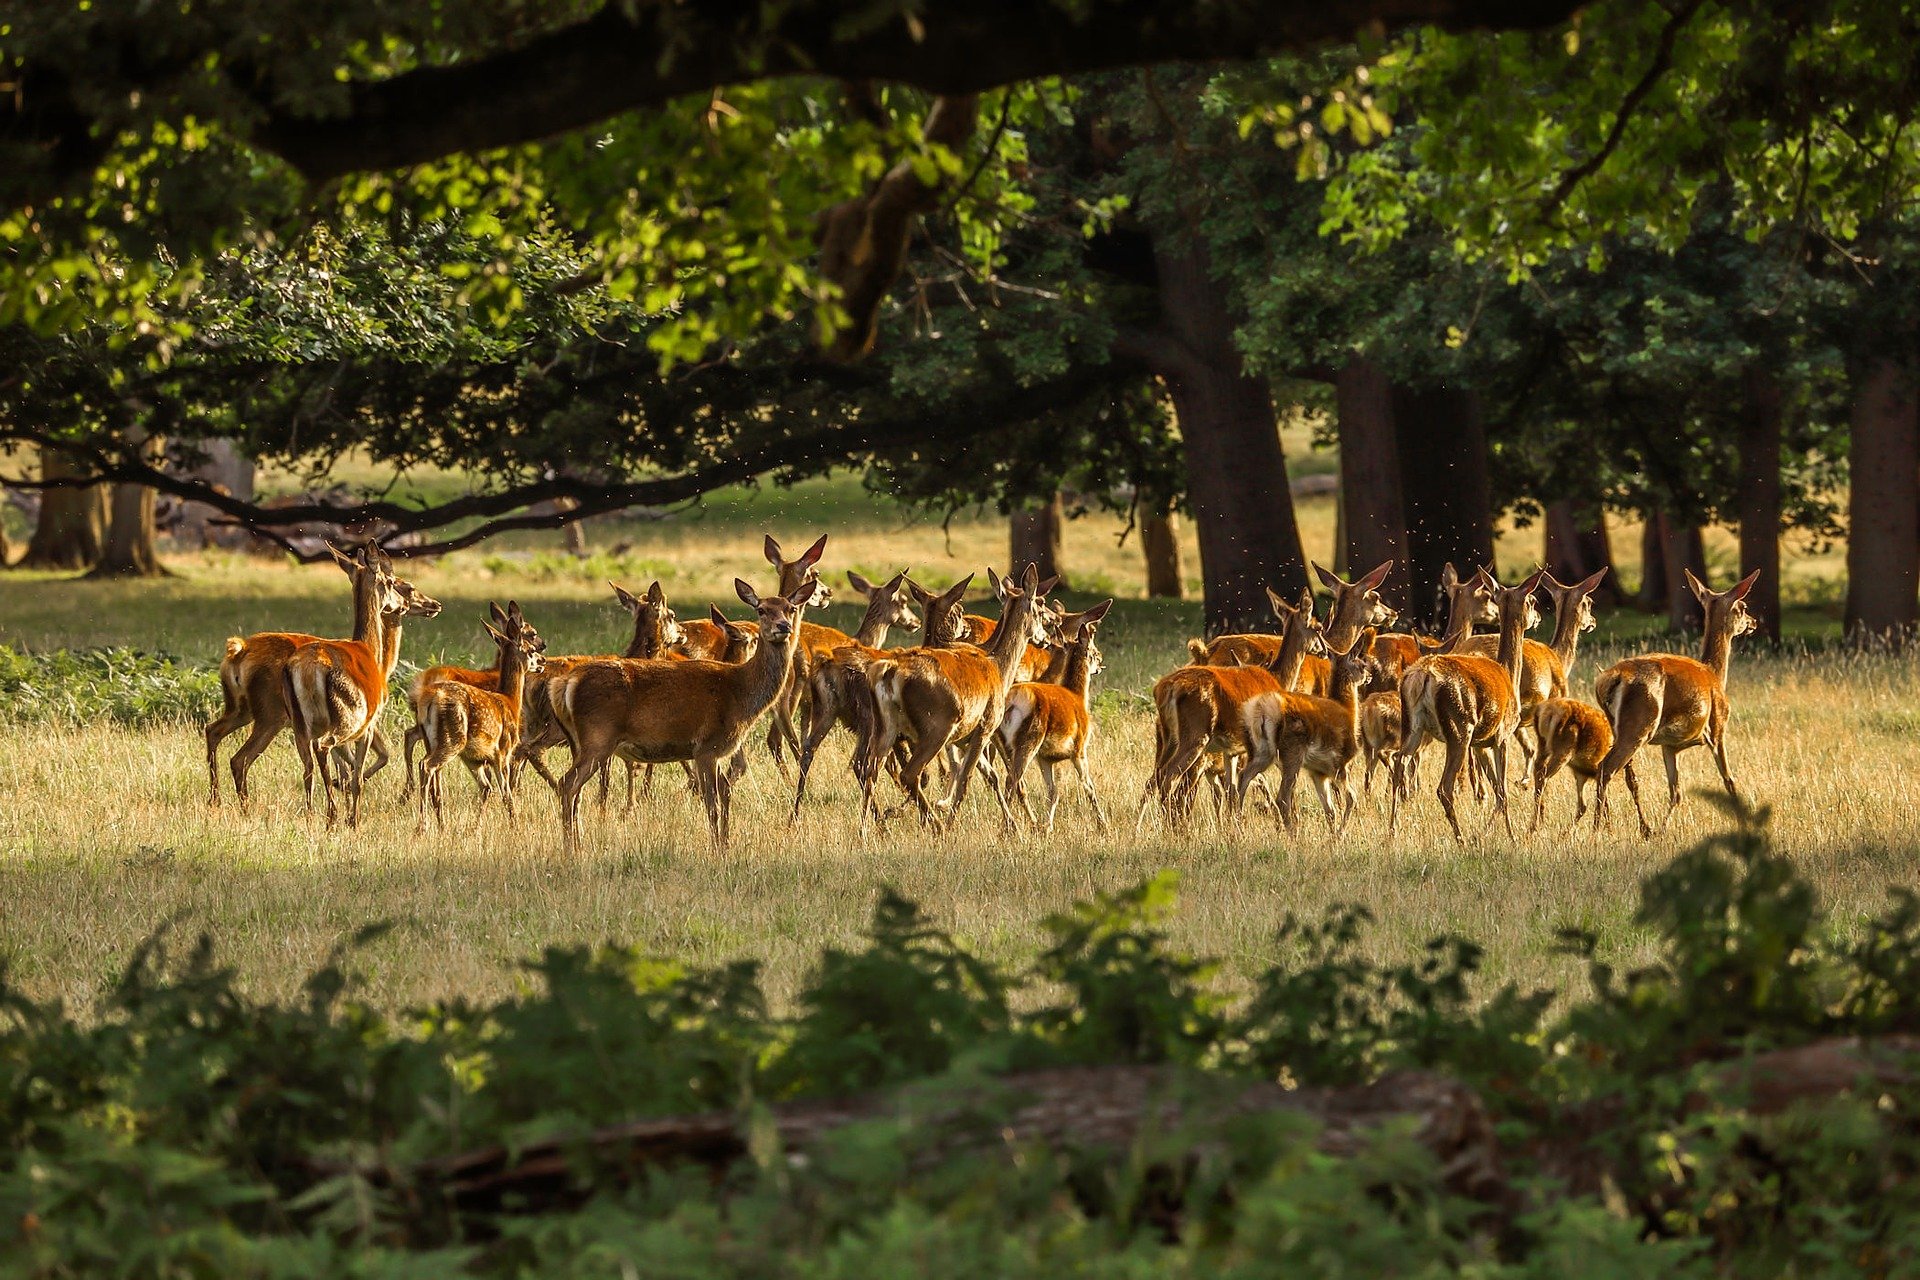 Herd of deer. Image by Roman Grac from Pixabay 